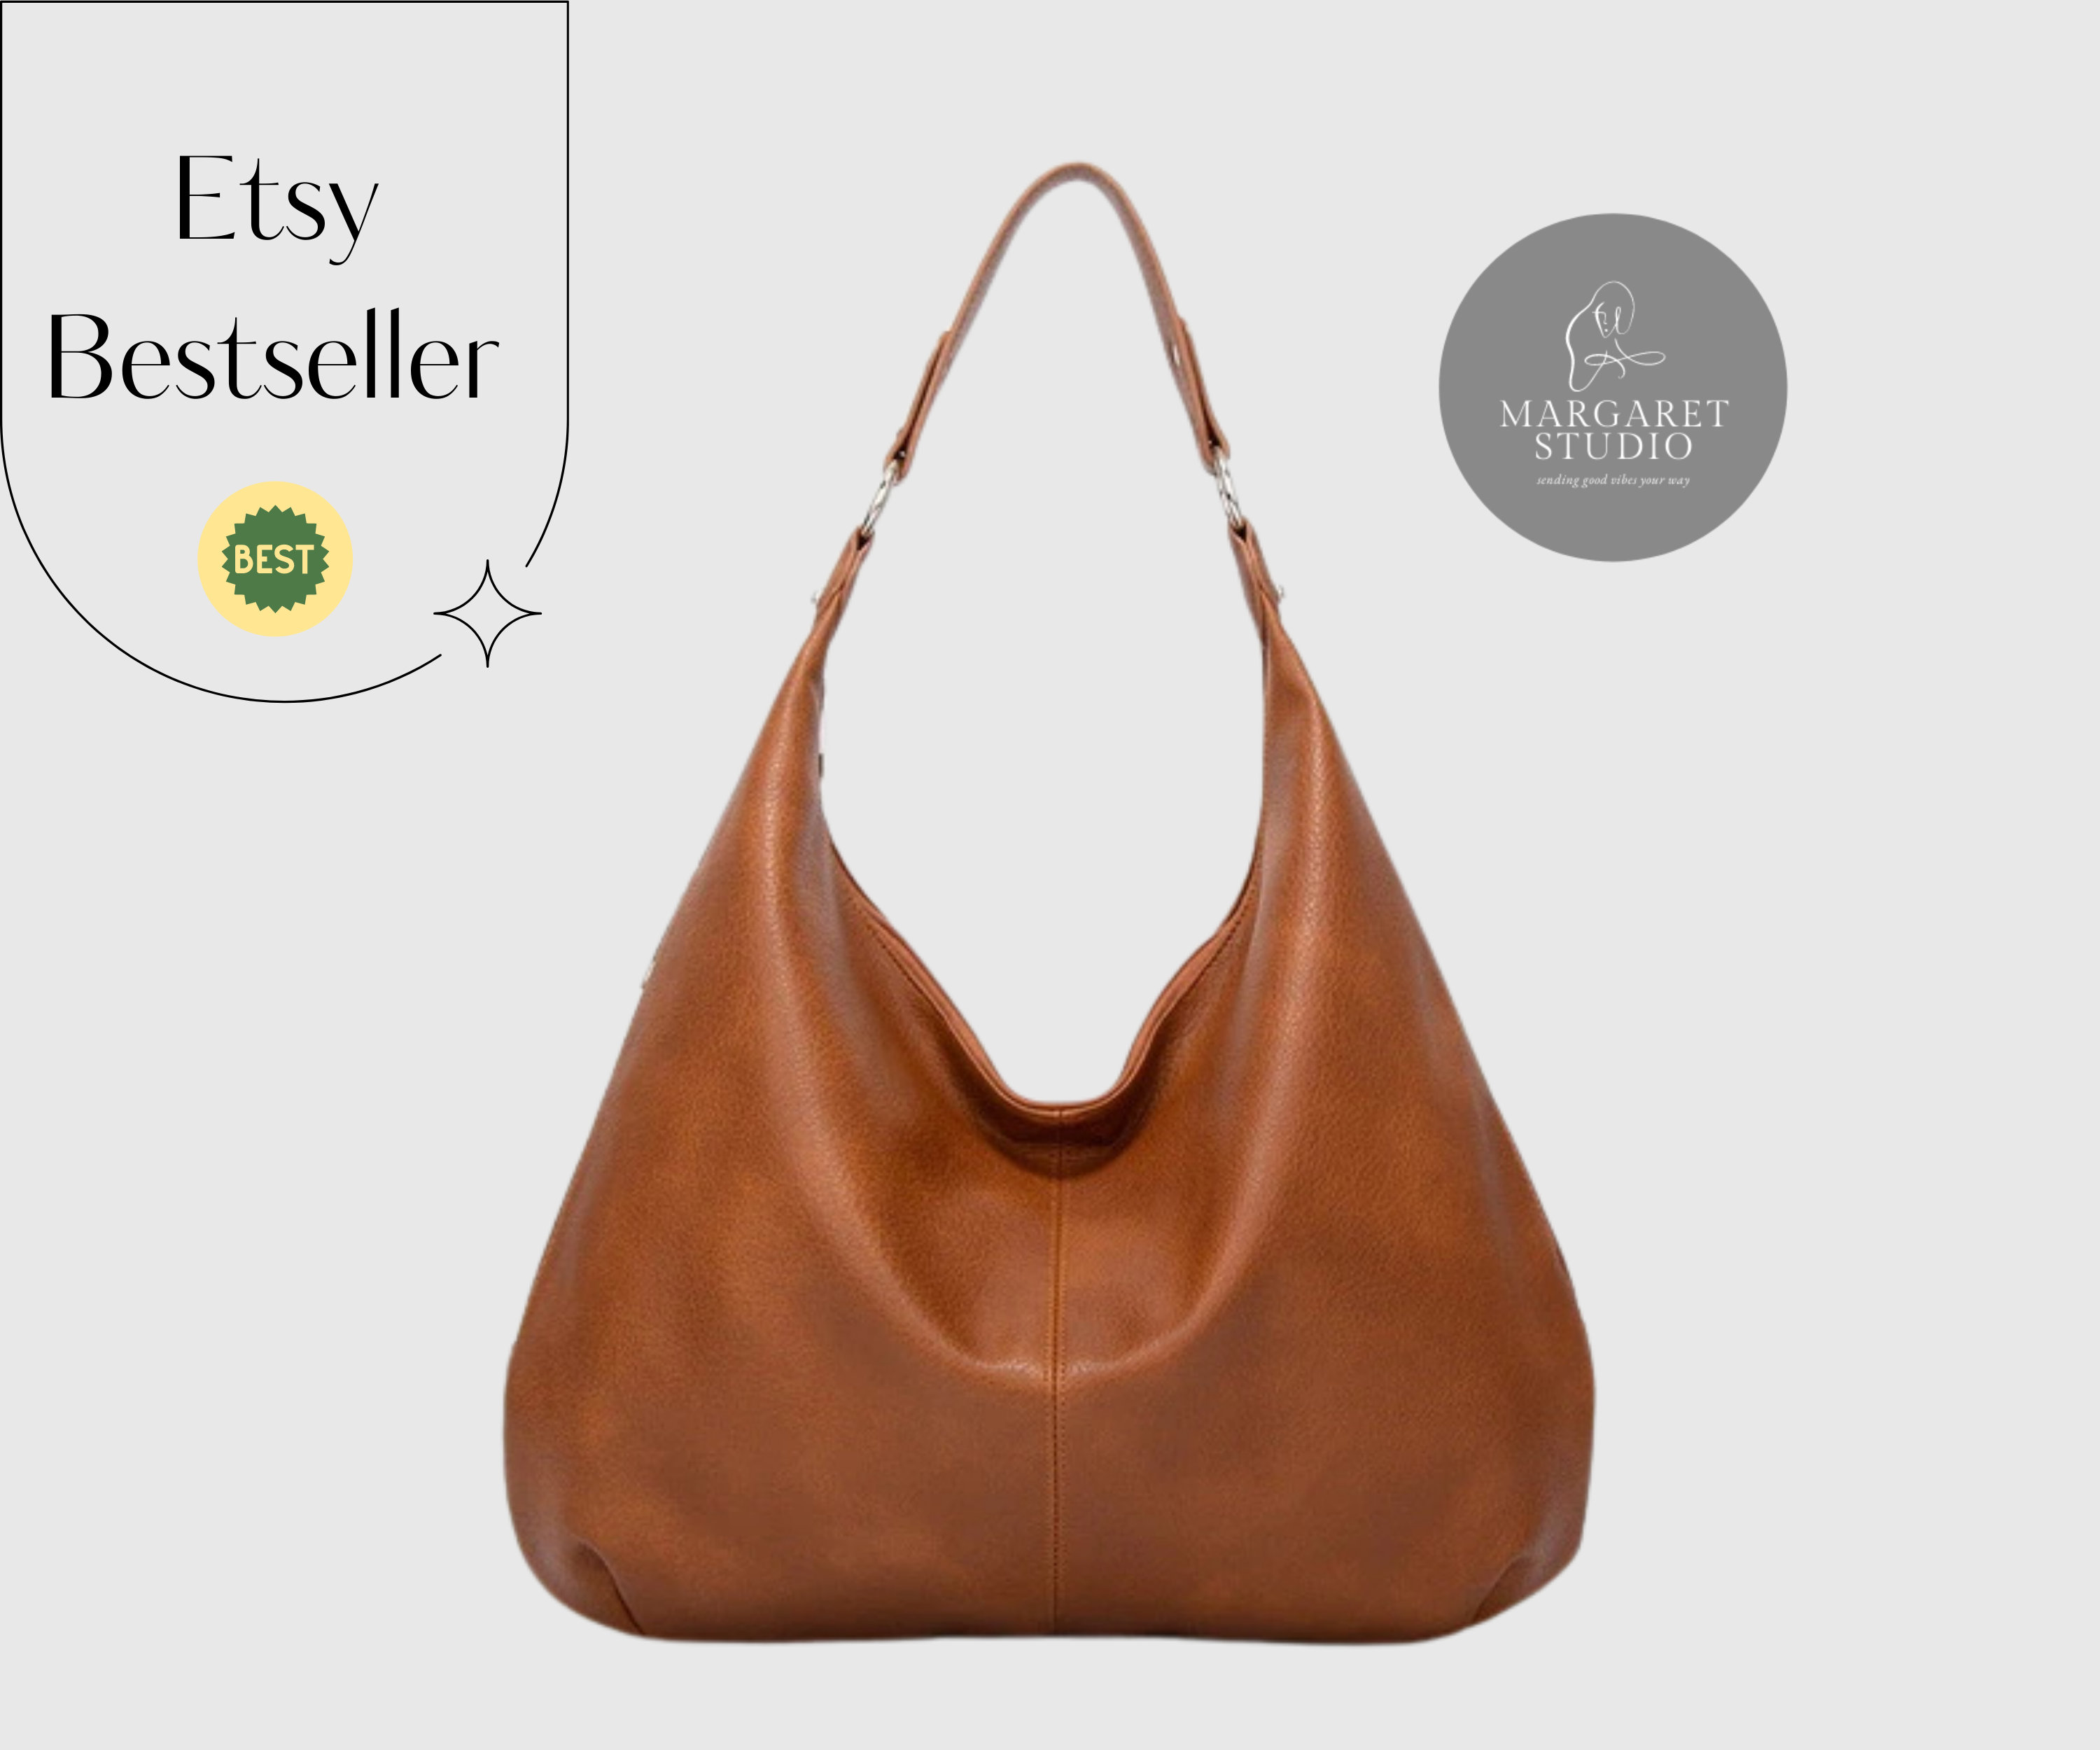 Top Original Ladies Crossbody Purse Neverfull Bags Luxury Handbags for  Woman with High Quality - China Bag and Handbag price